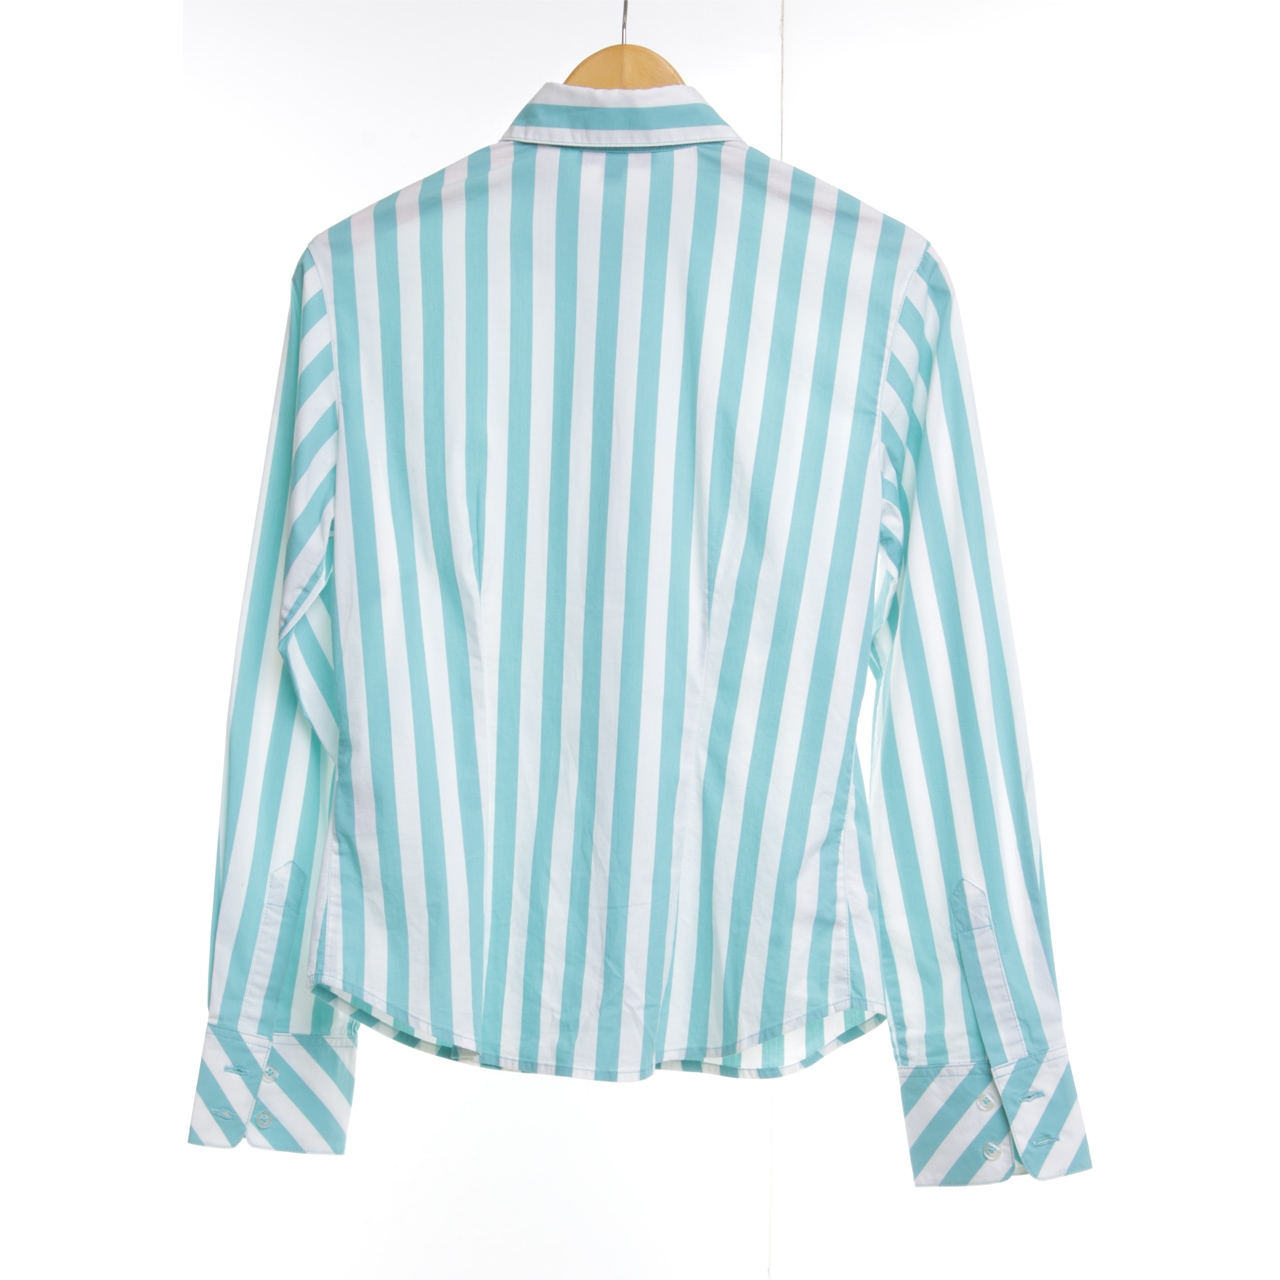 Marcs Turquoise Striped Shirt